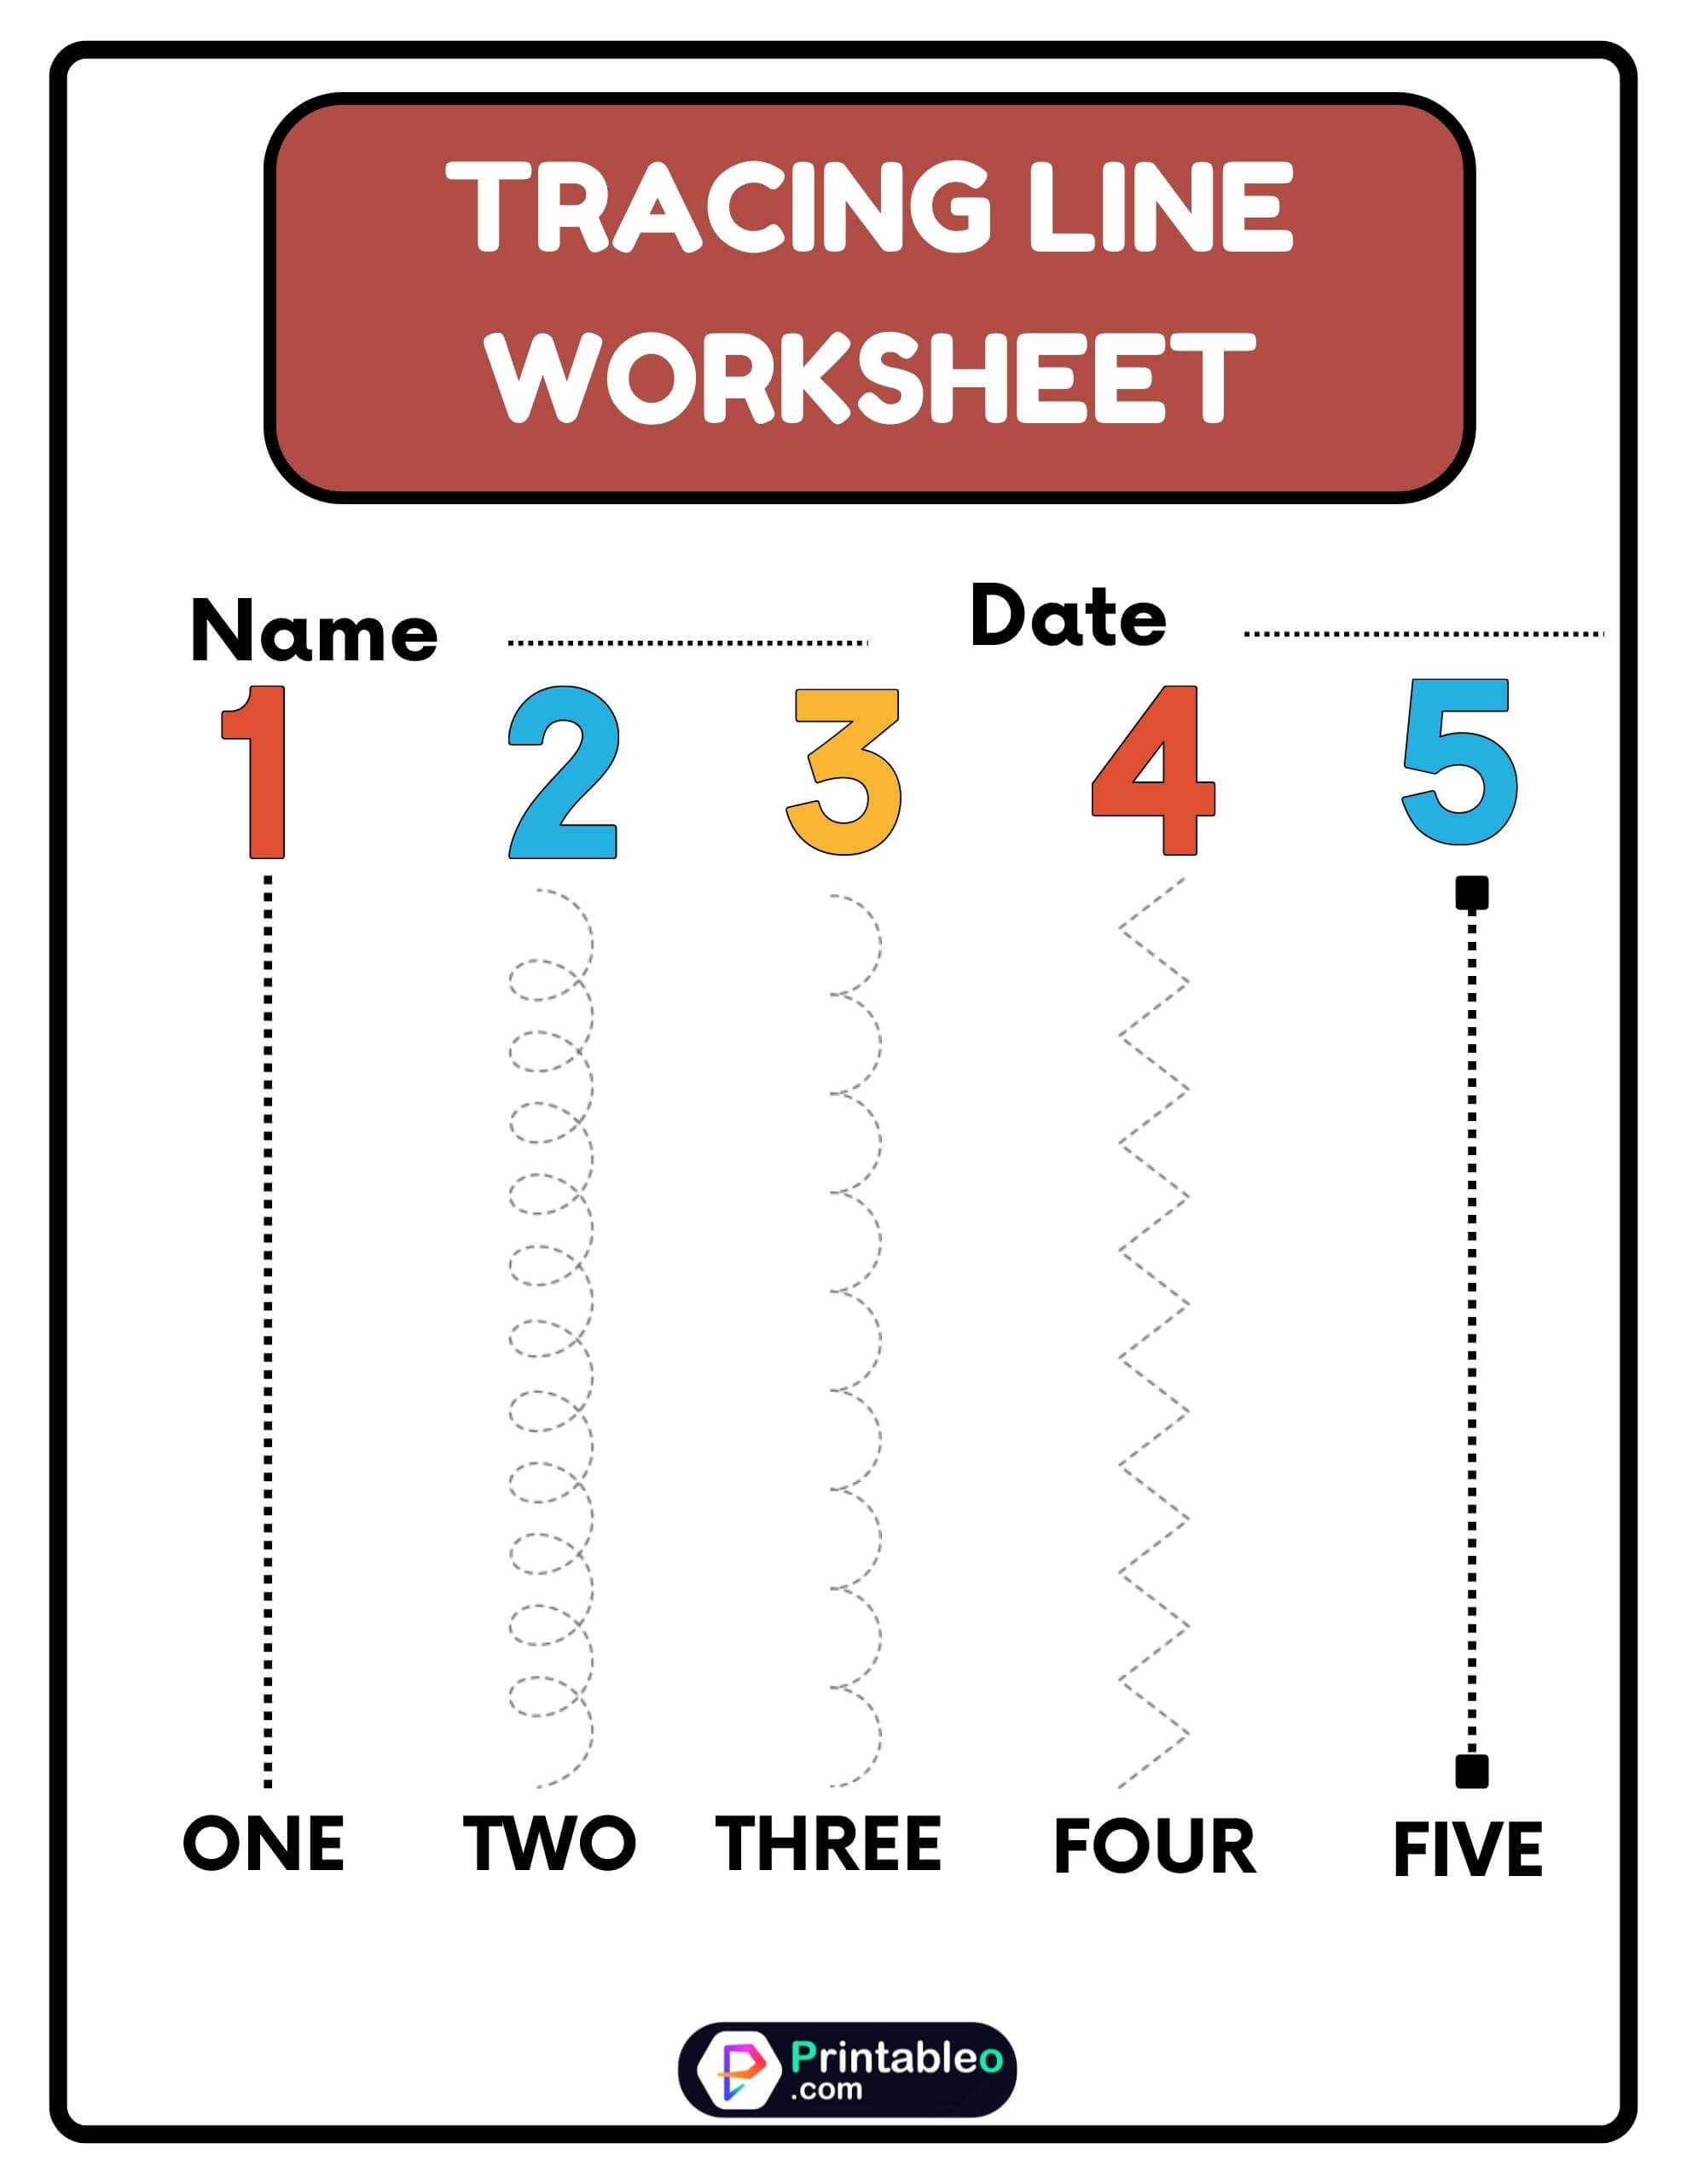 Tracing Line Worksheet Download FREE Printable PDFs